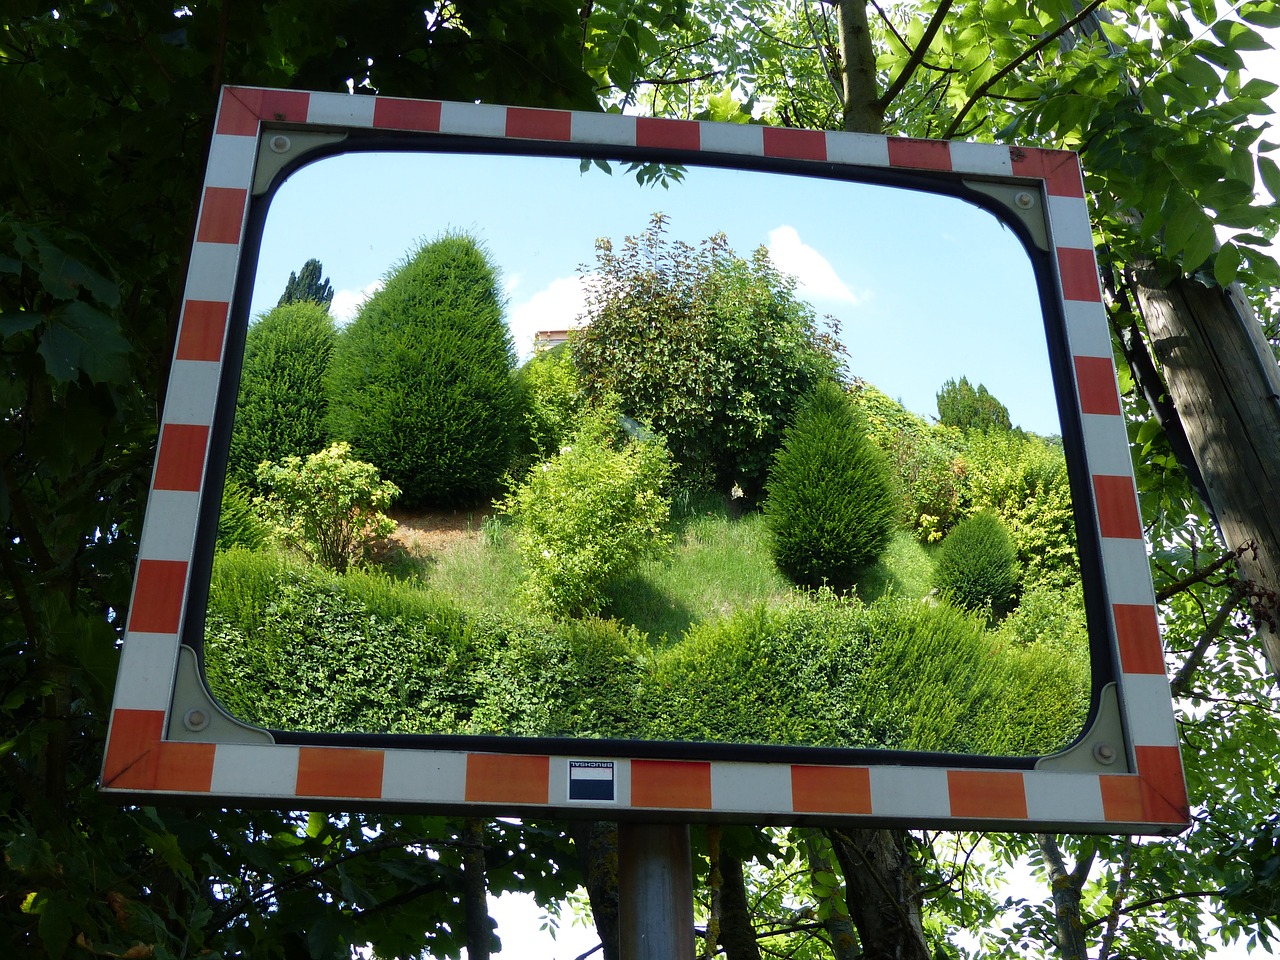 mirror traffic mirror reflection free photo